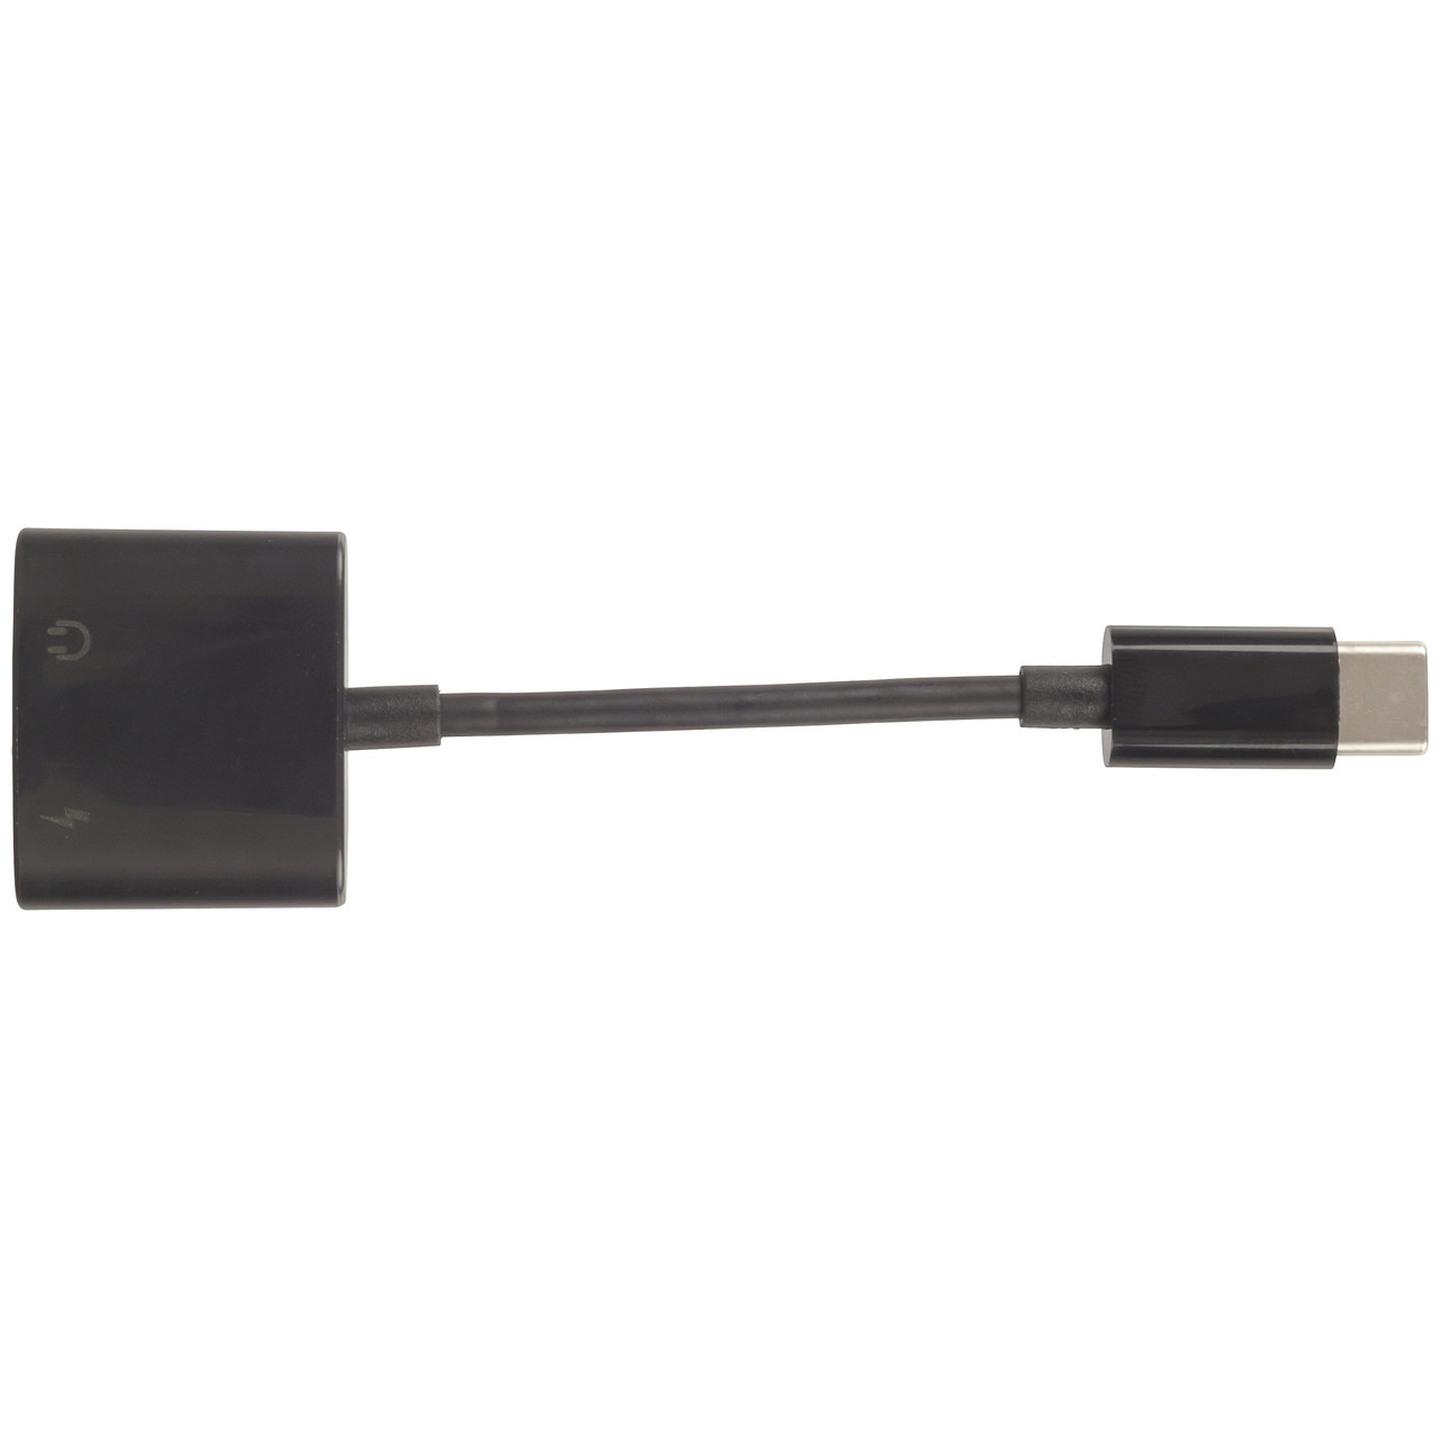 2-In-1 USB Type-C and 3.5mm Audio Adaptor